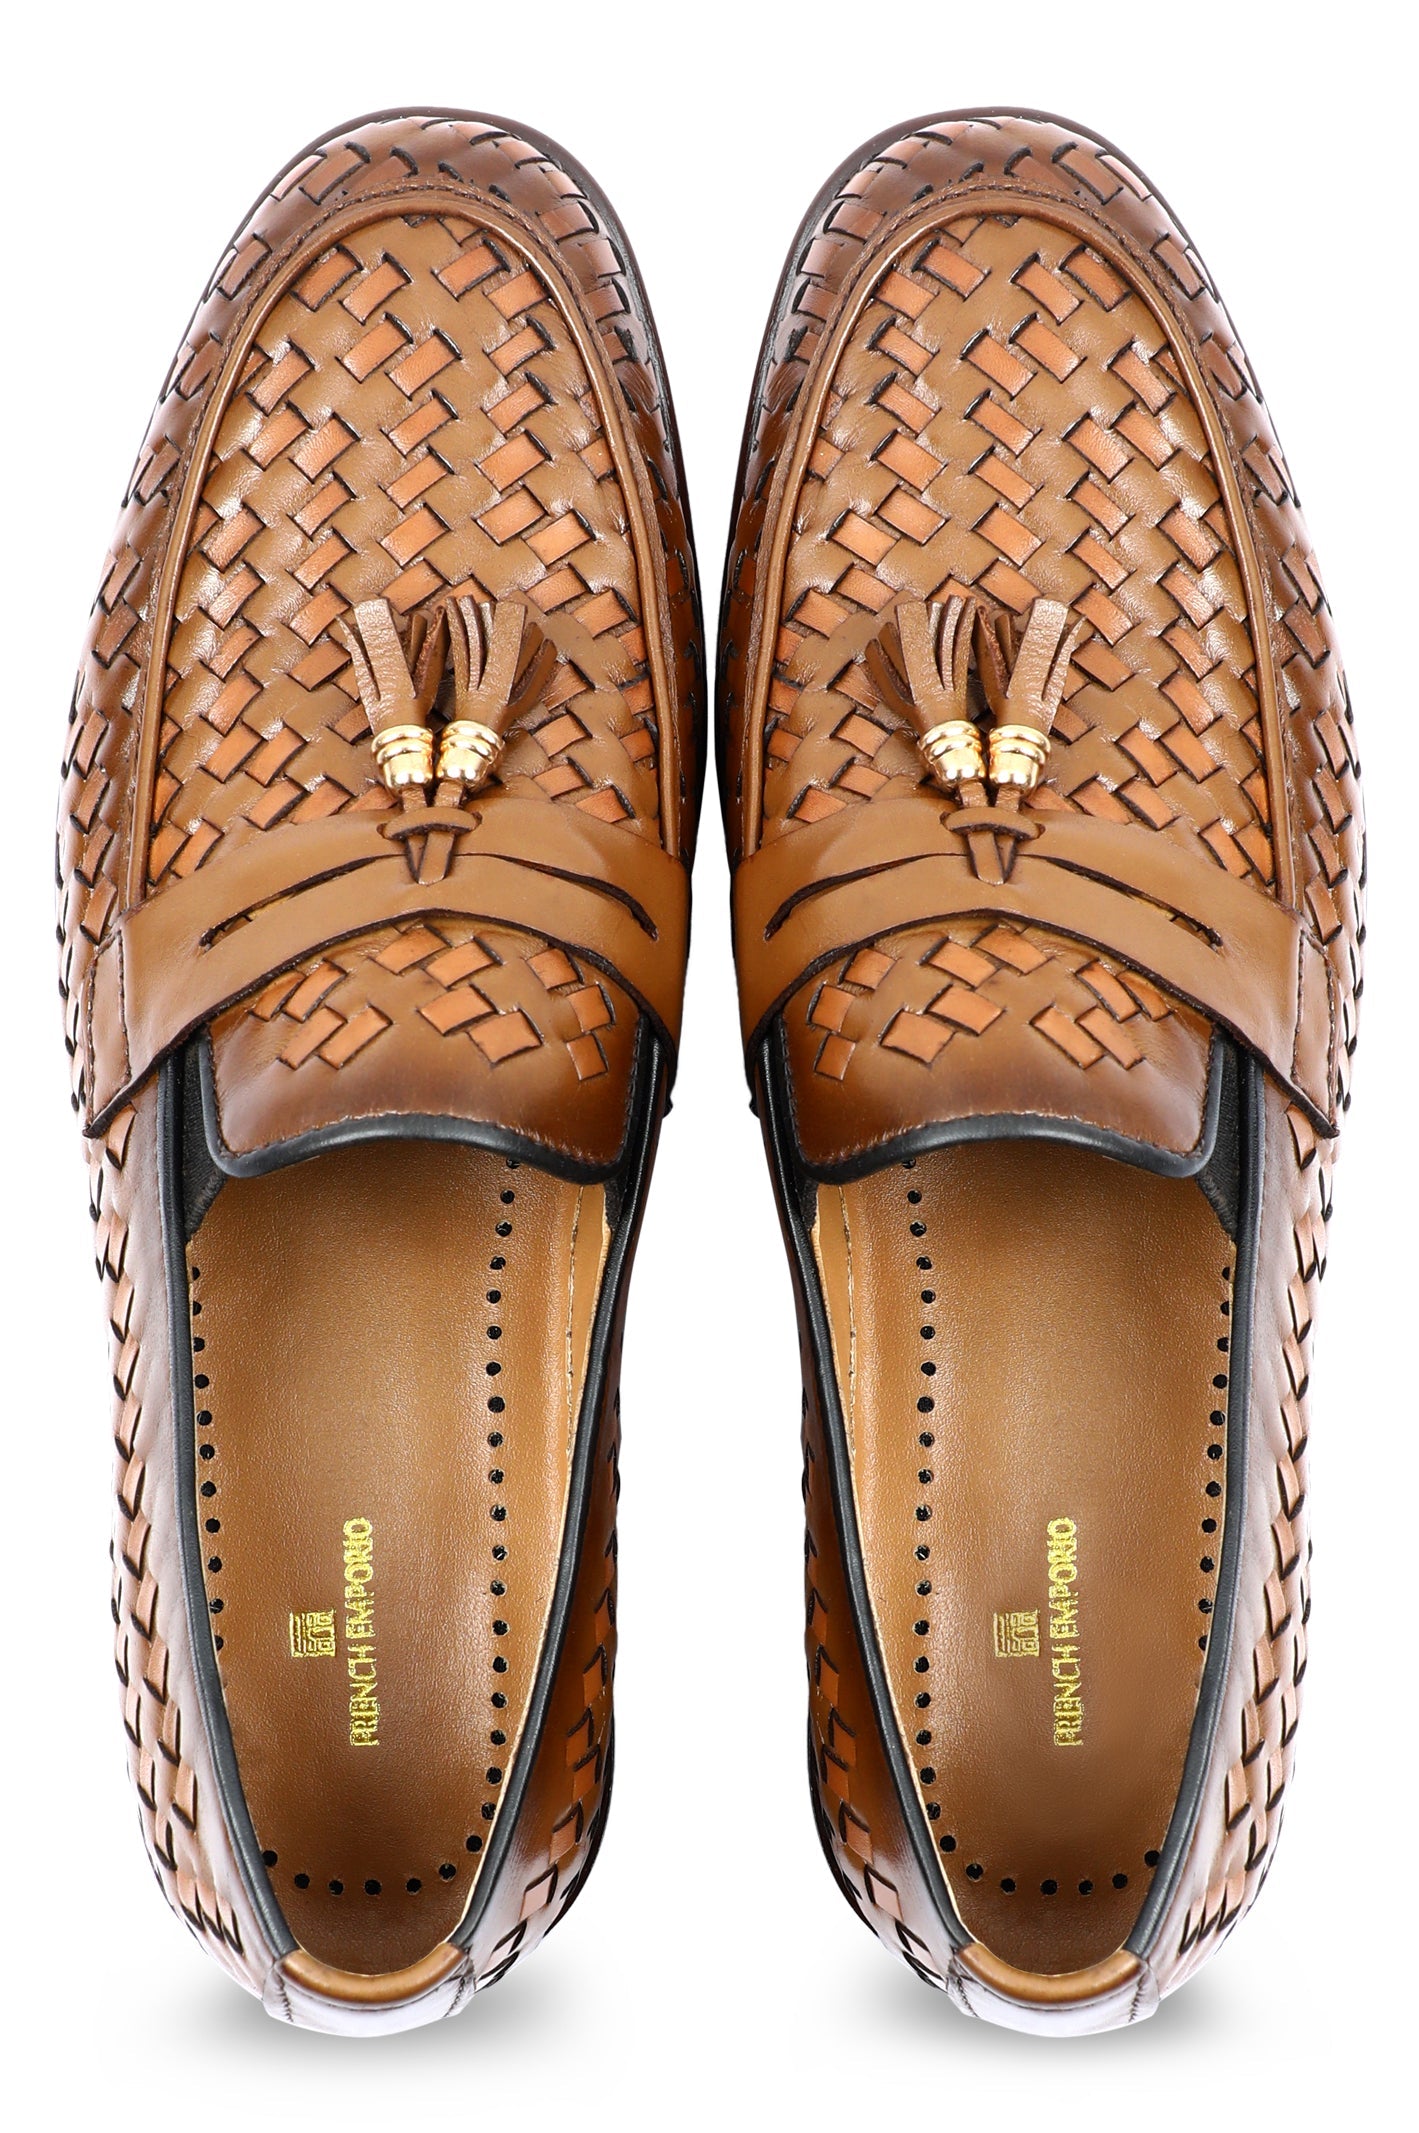 Formal Shoes For Men in Brown SKU: SMF-0163-BROWN - Diners